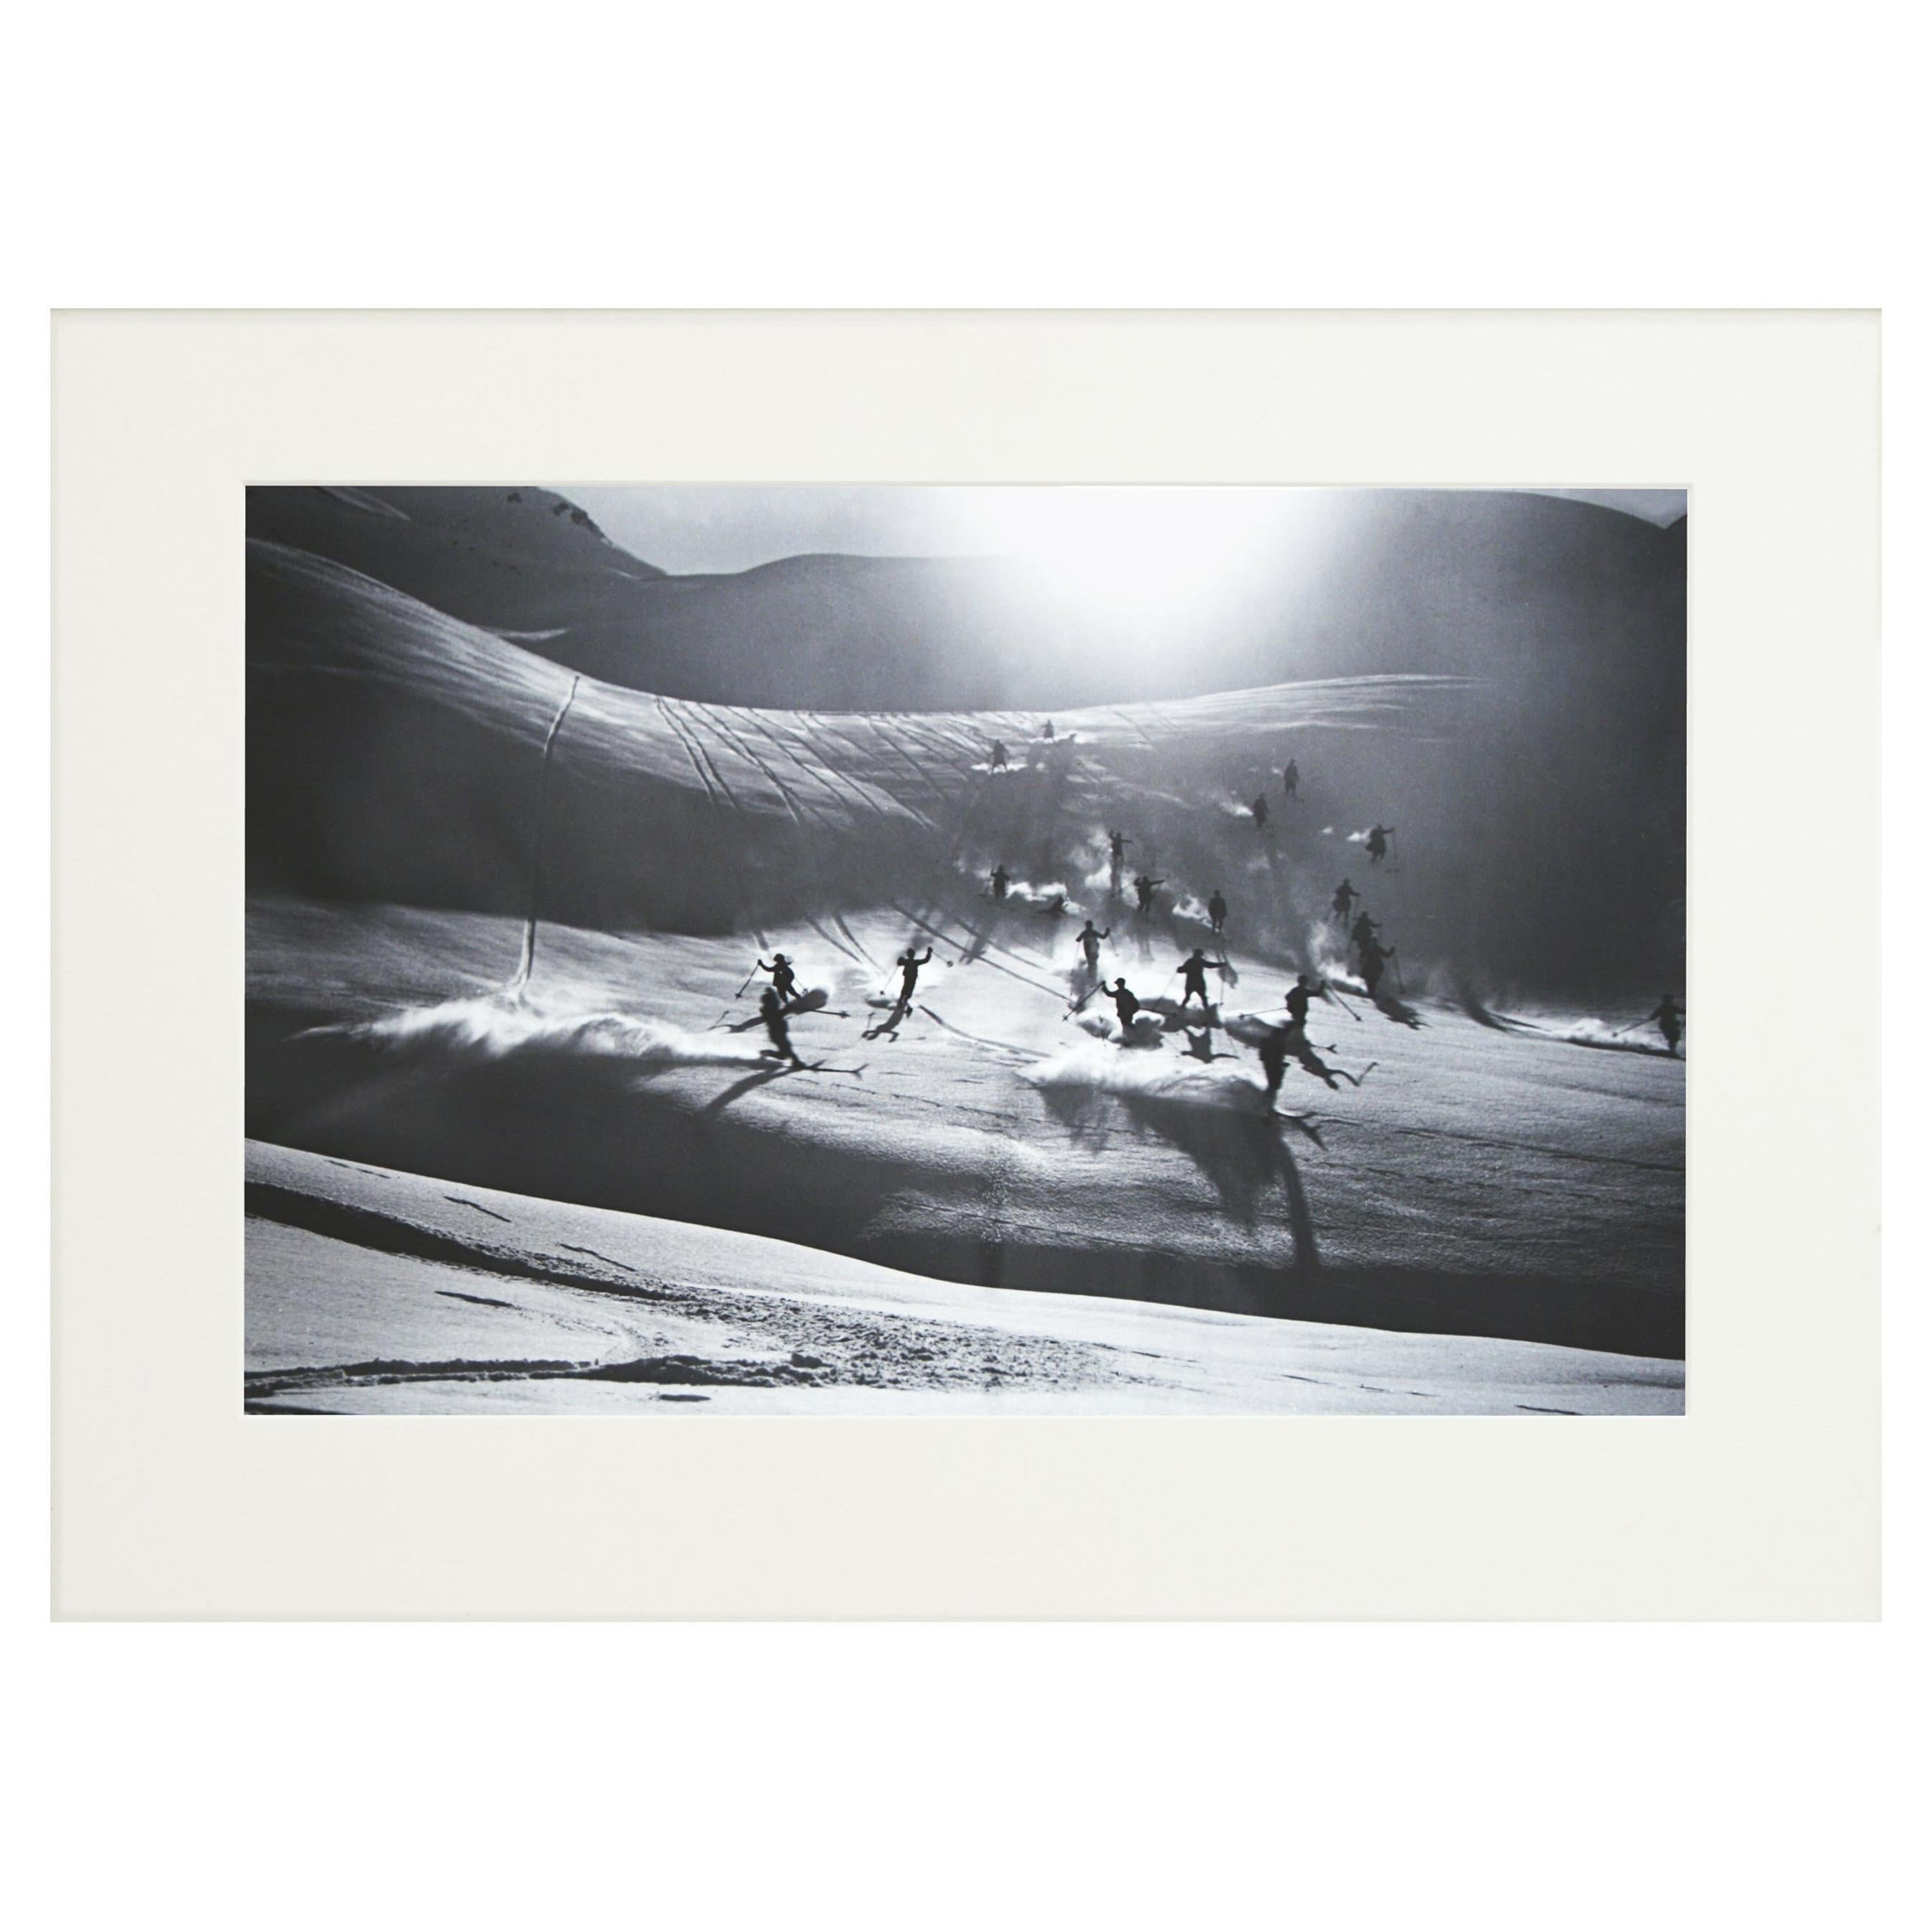 Alpine Ski Photograph, 'Happy Skiers' Taken from 1930s Original